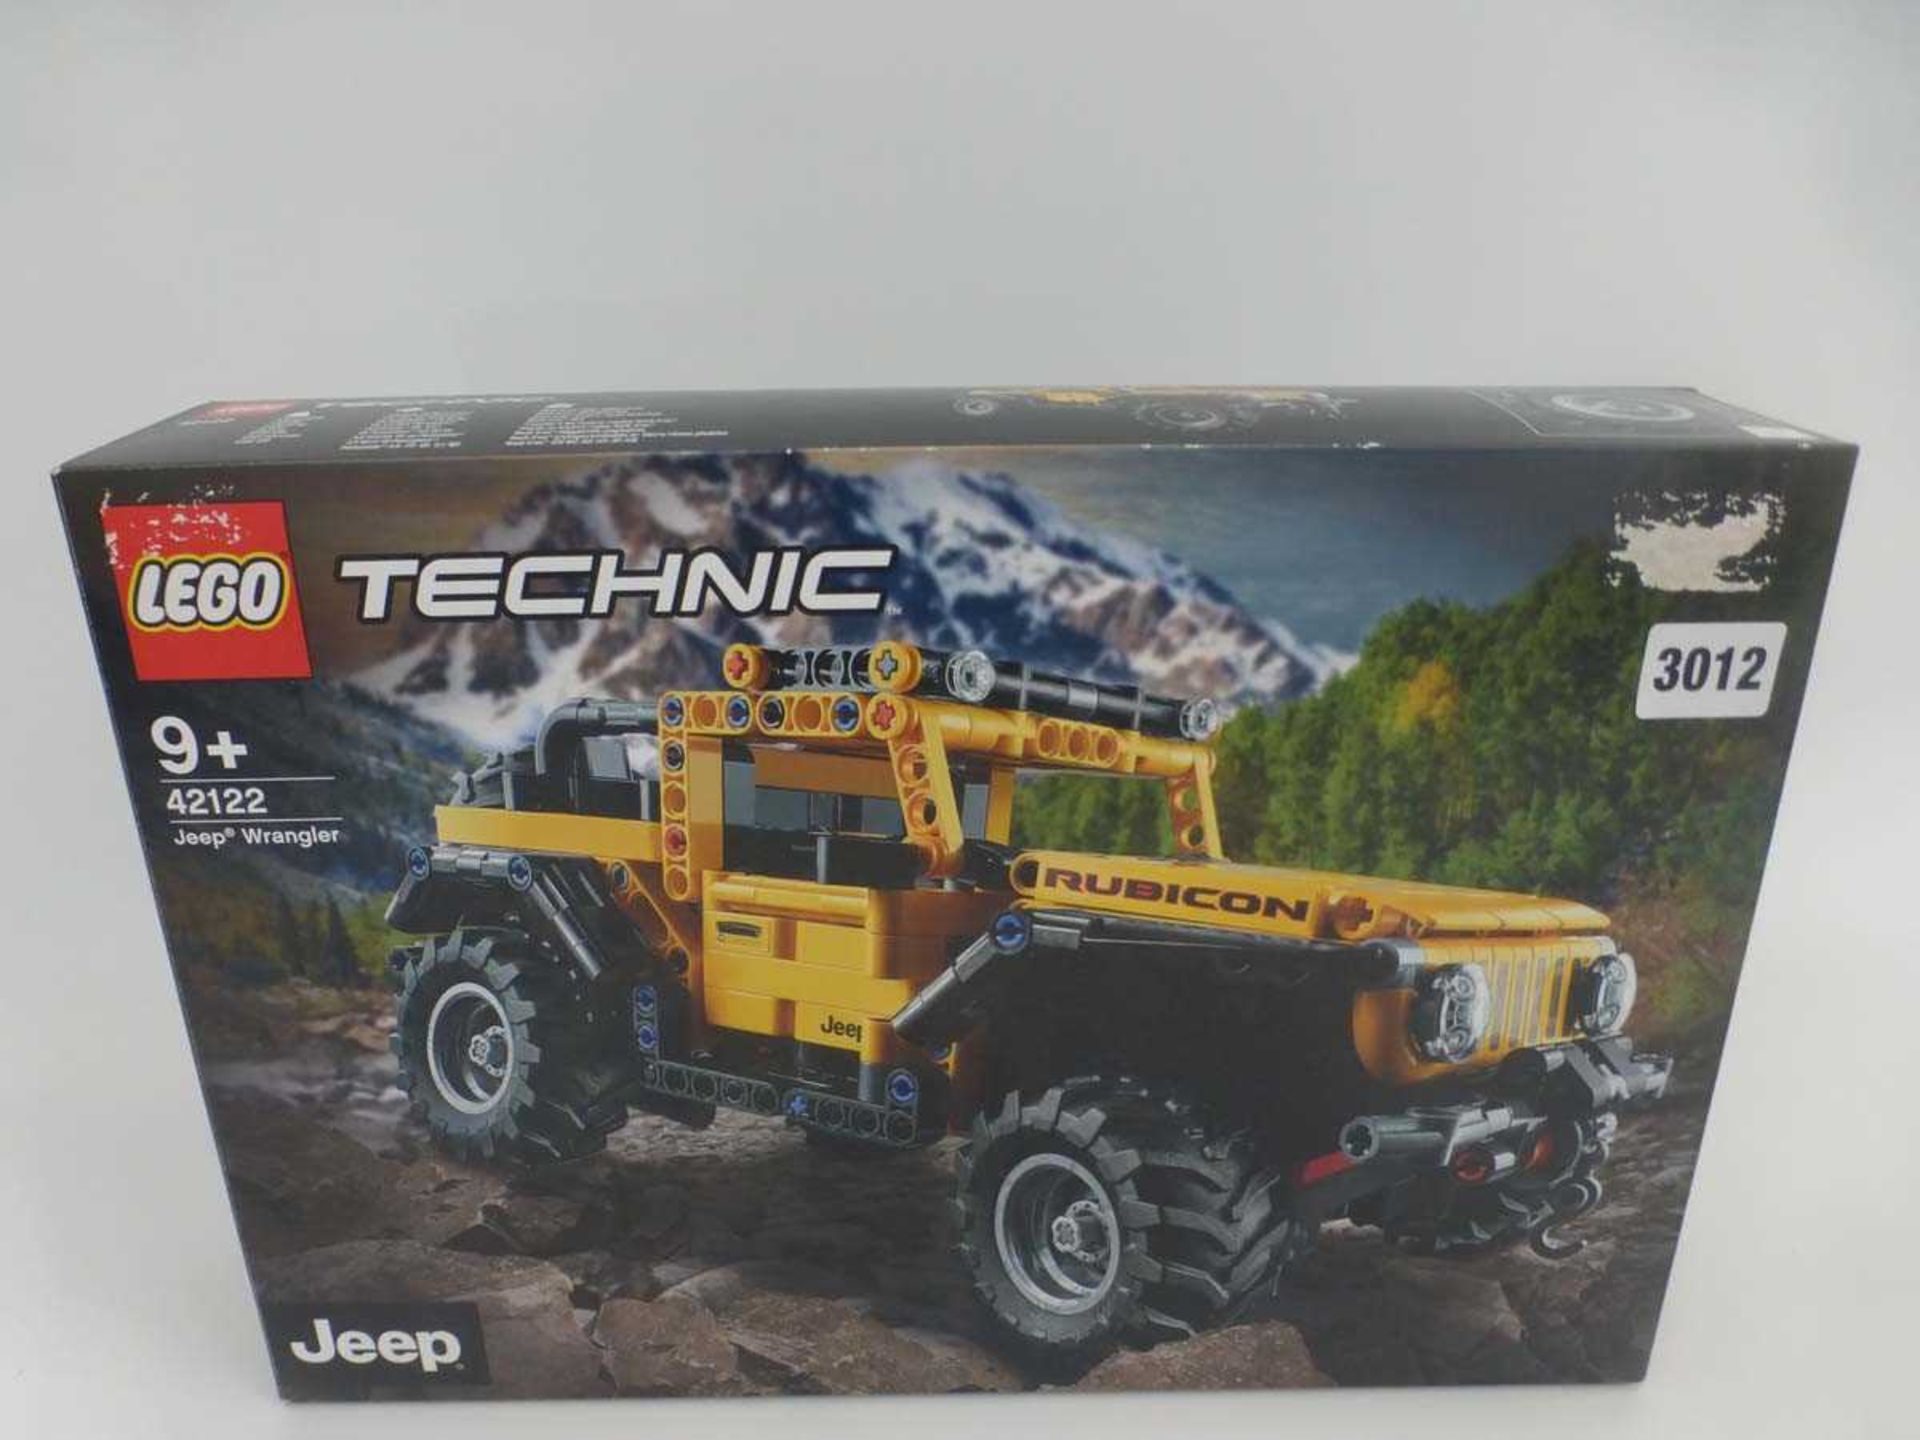 A Lego Technic 42122 Jeep Wrangler set, boxedContents unchecked